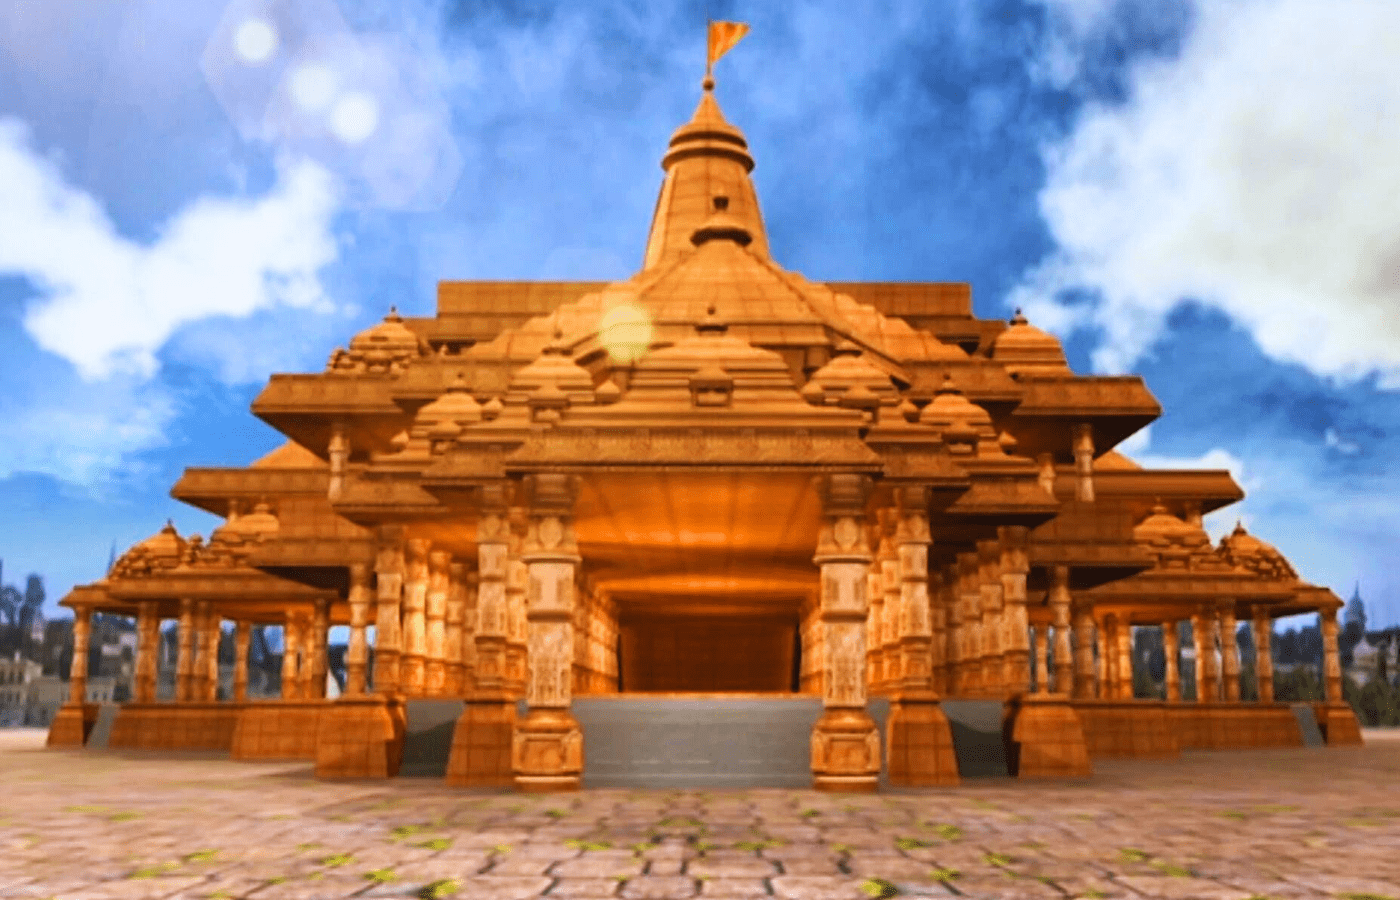 1080p Ayodhya Ram Mandir Hd Wallpaper - 4K, PNG, JPG Photos